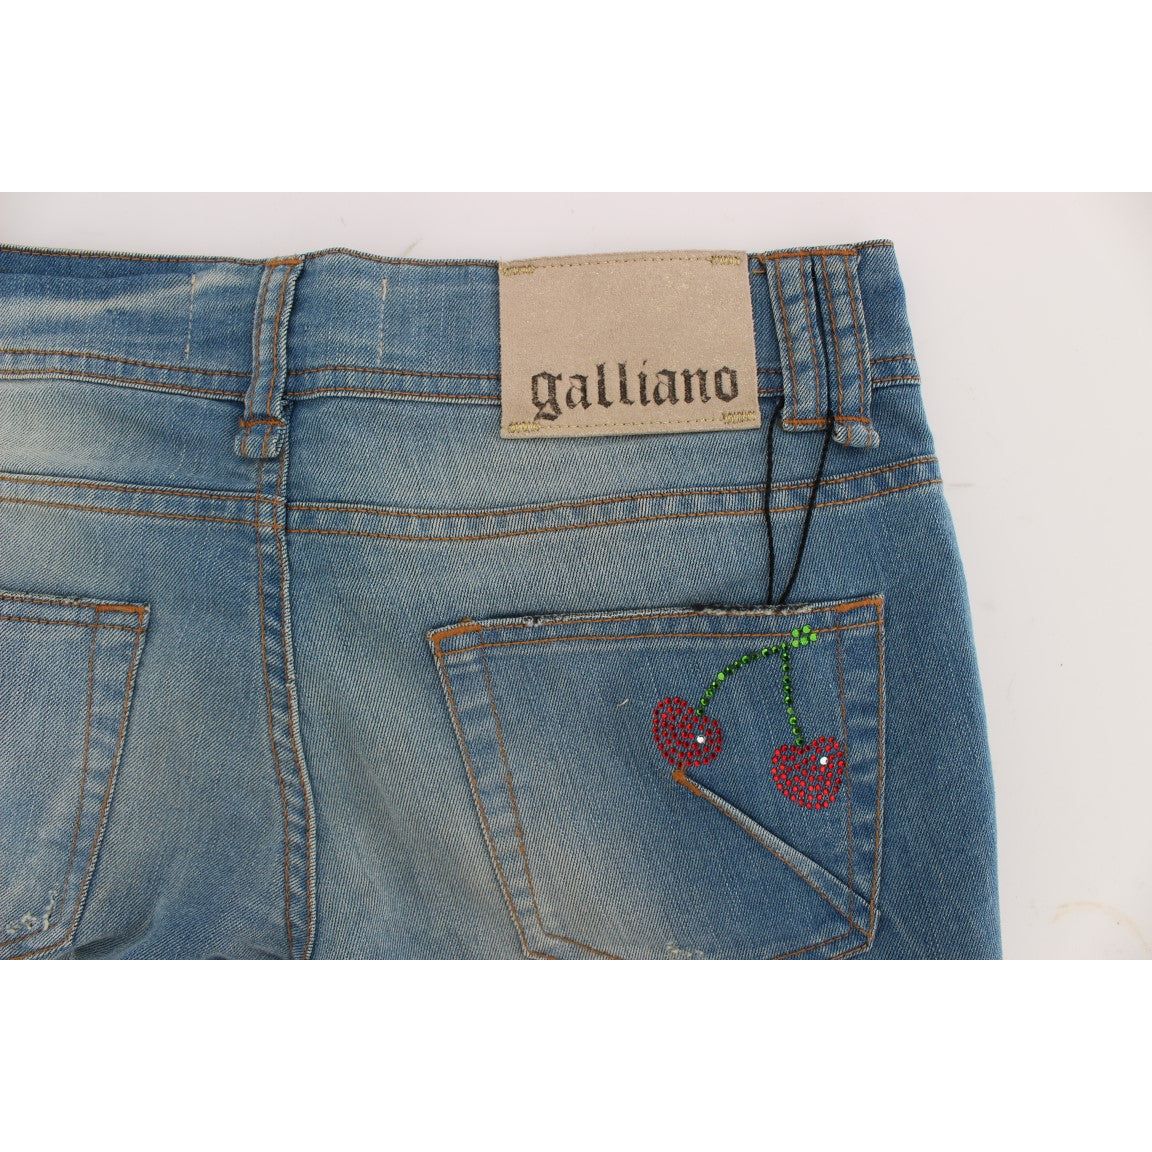 John Galliano Sleek Blue Slim Fit Designer Jeans blue-wash-cotton-blend-slim-fit-jeans-1 329905-blue-wash-cotton-blend-slim-fit-jeans-4-8.jpg